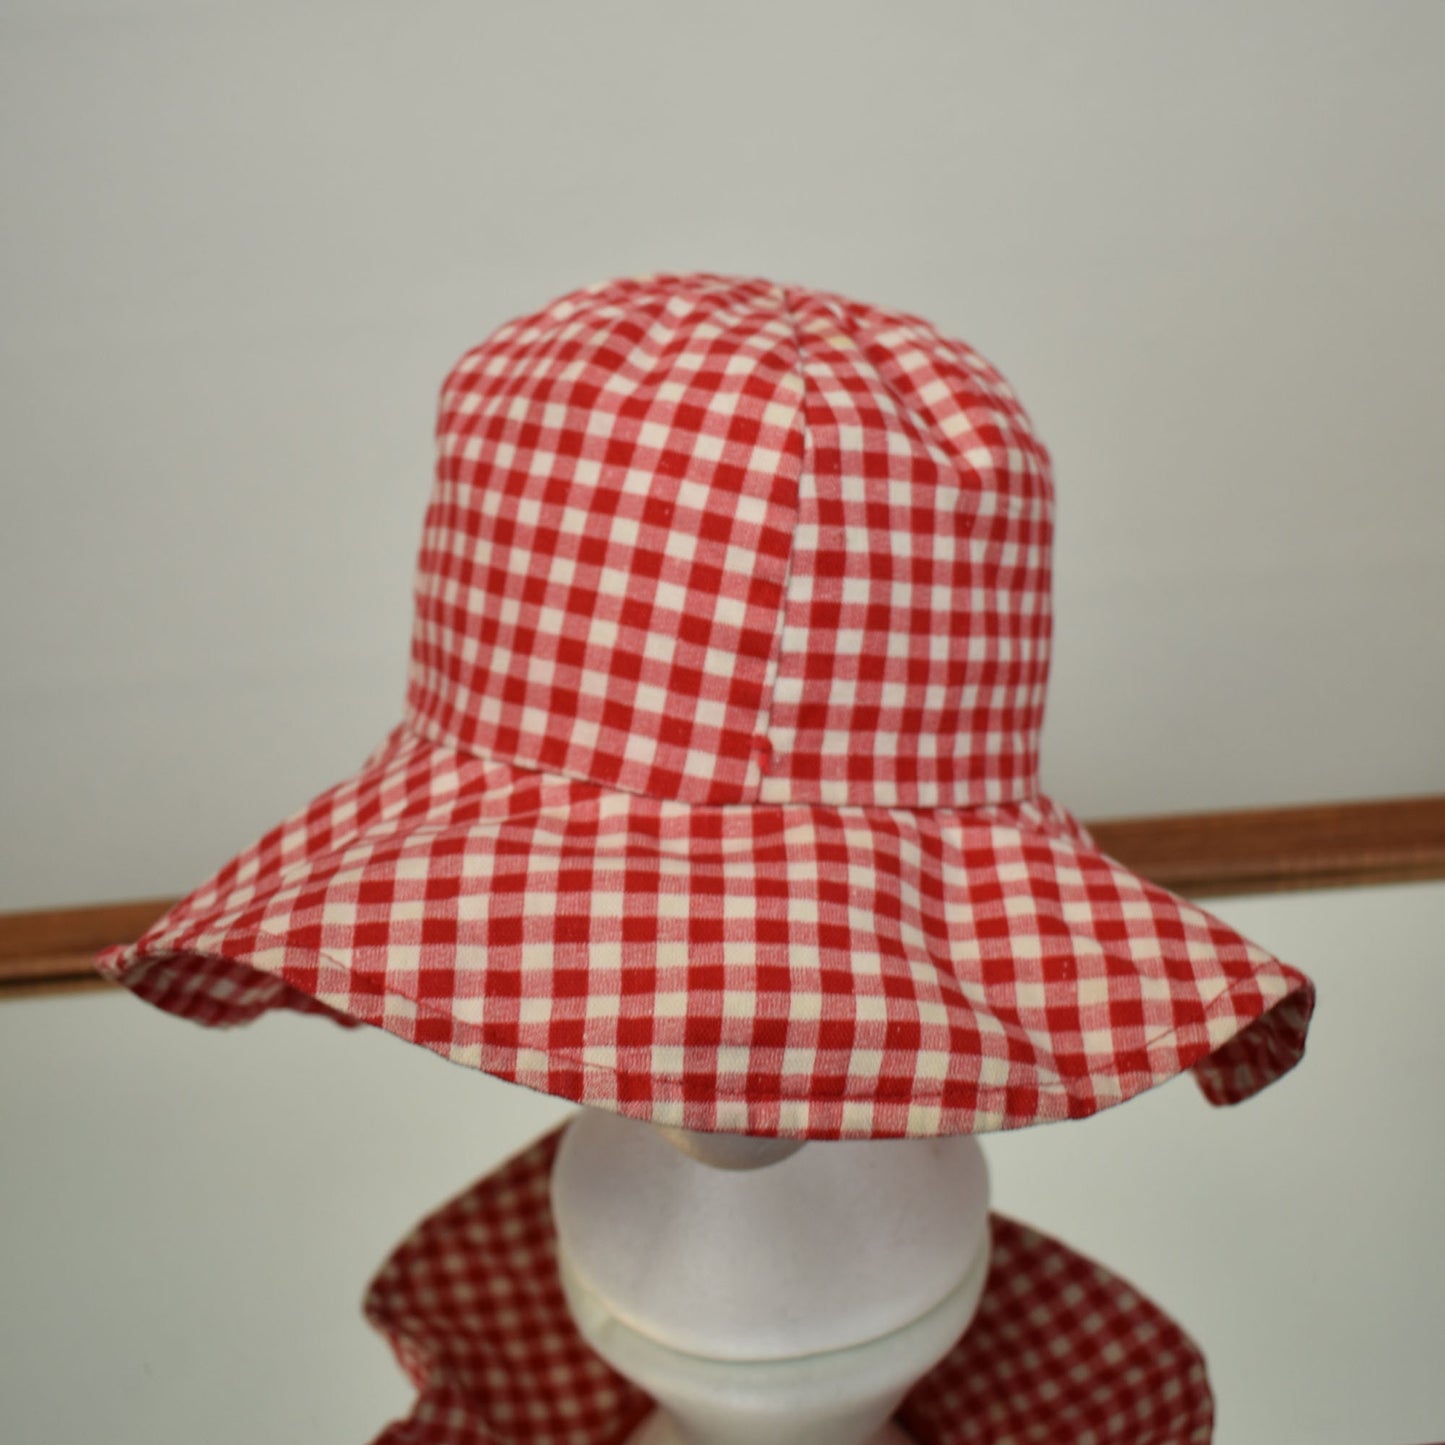 Vintage 70s Floppy Cotton Sun Hat Paul B. Stone - Gingham Pattern - California Country Girl Style Womens - Small/Medium